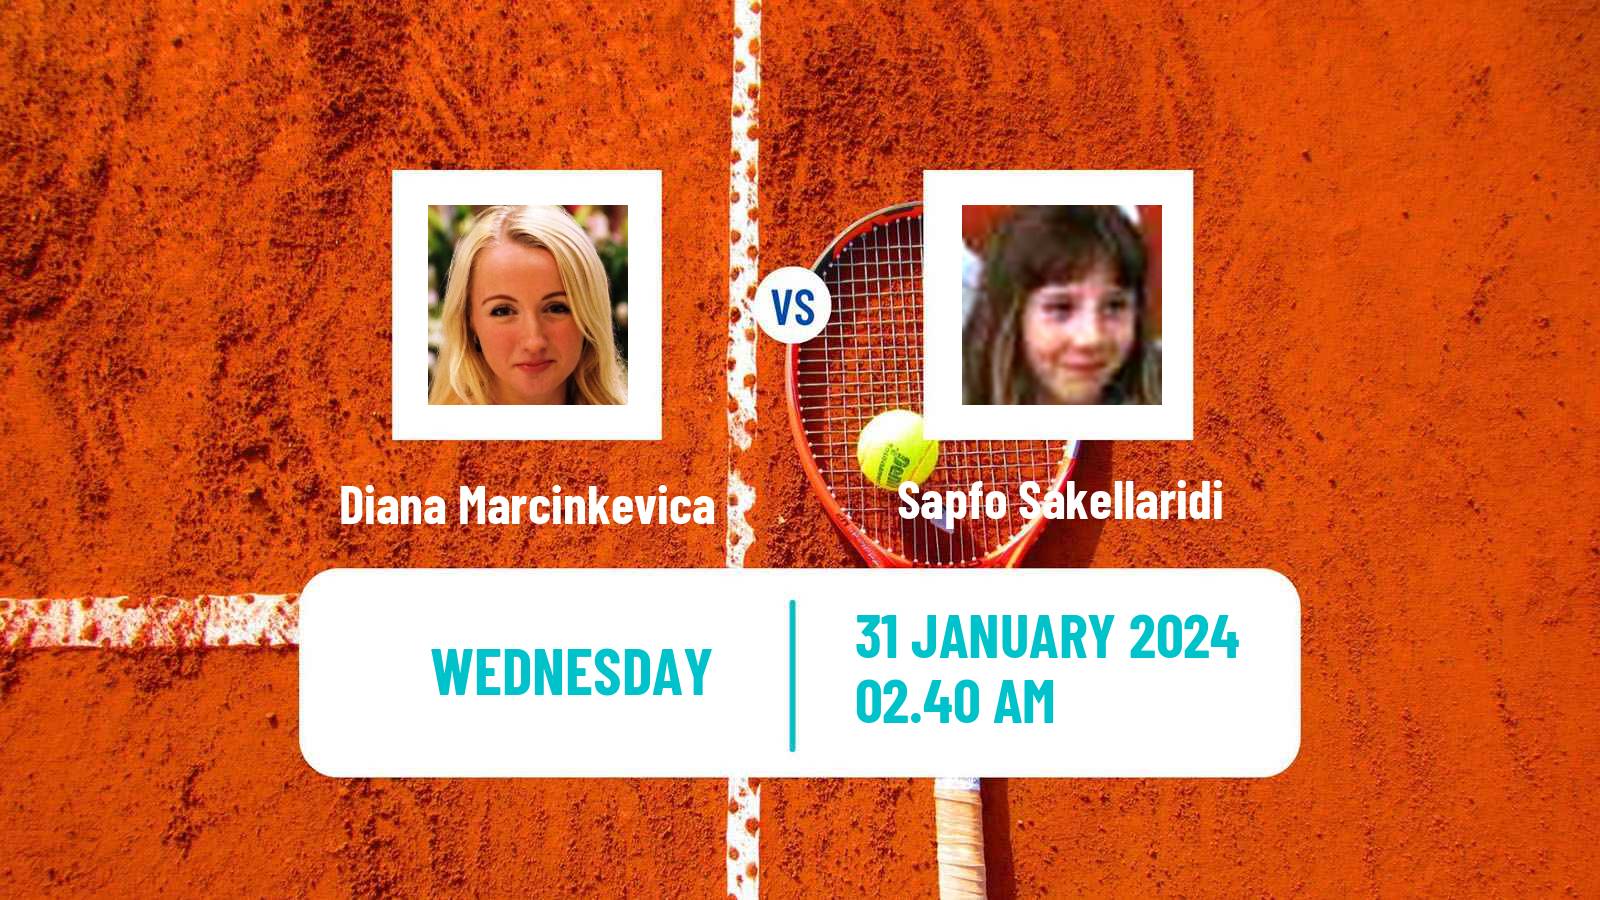 Tennis ITF W50 Indore Women Diana Marcinkevica - Sapfo Sakellaridi